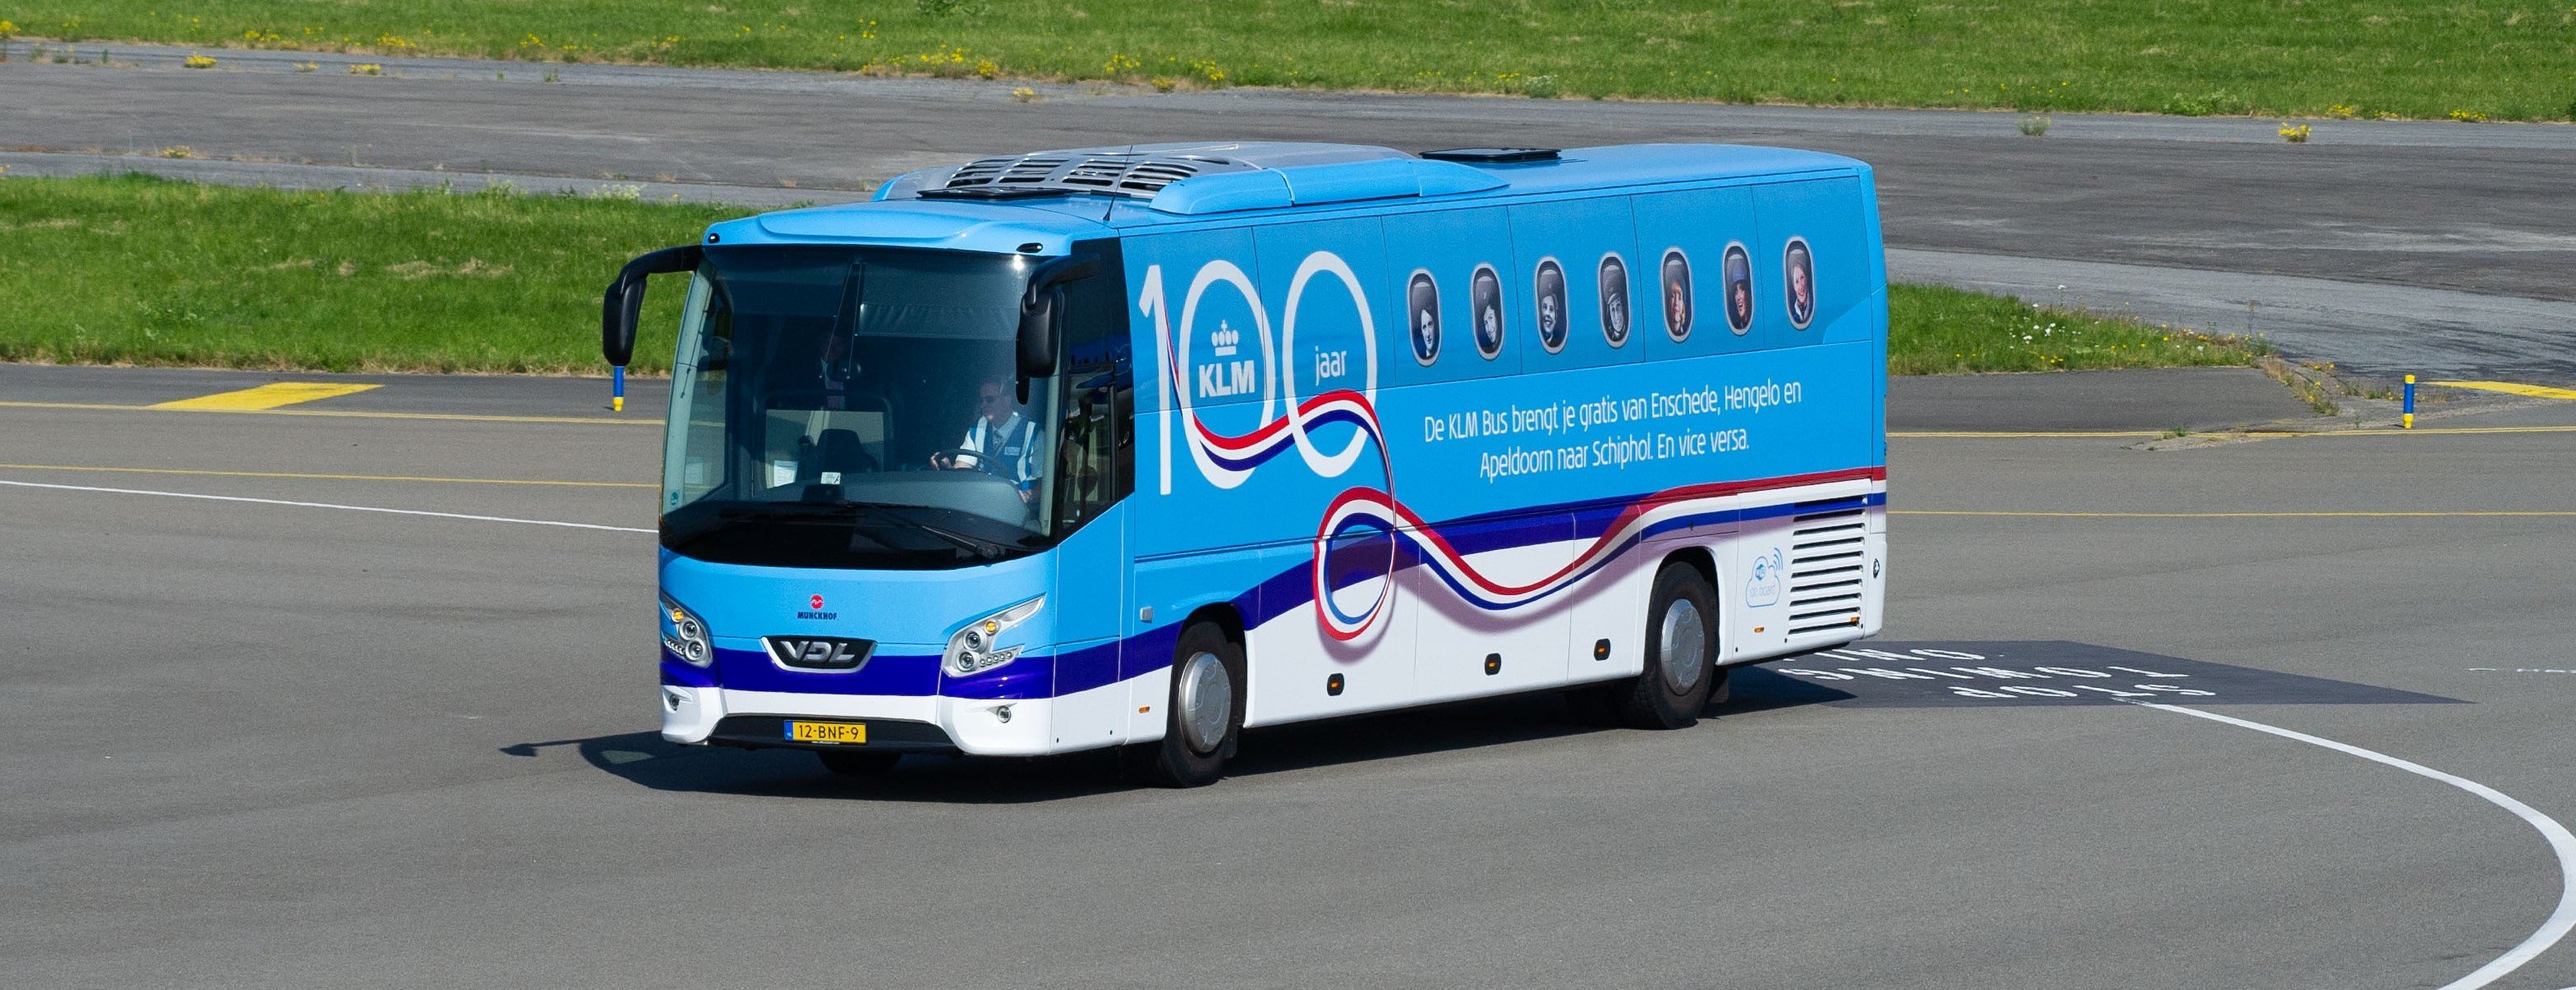 Take the KLM Bus from Enschede, Hengelo or Apeldoorn to Rio de Janeiro